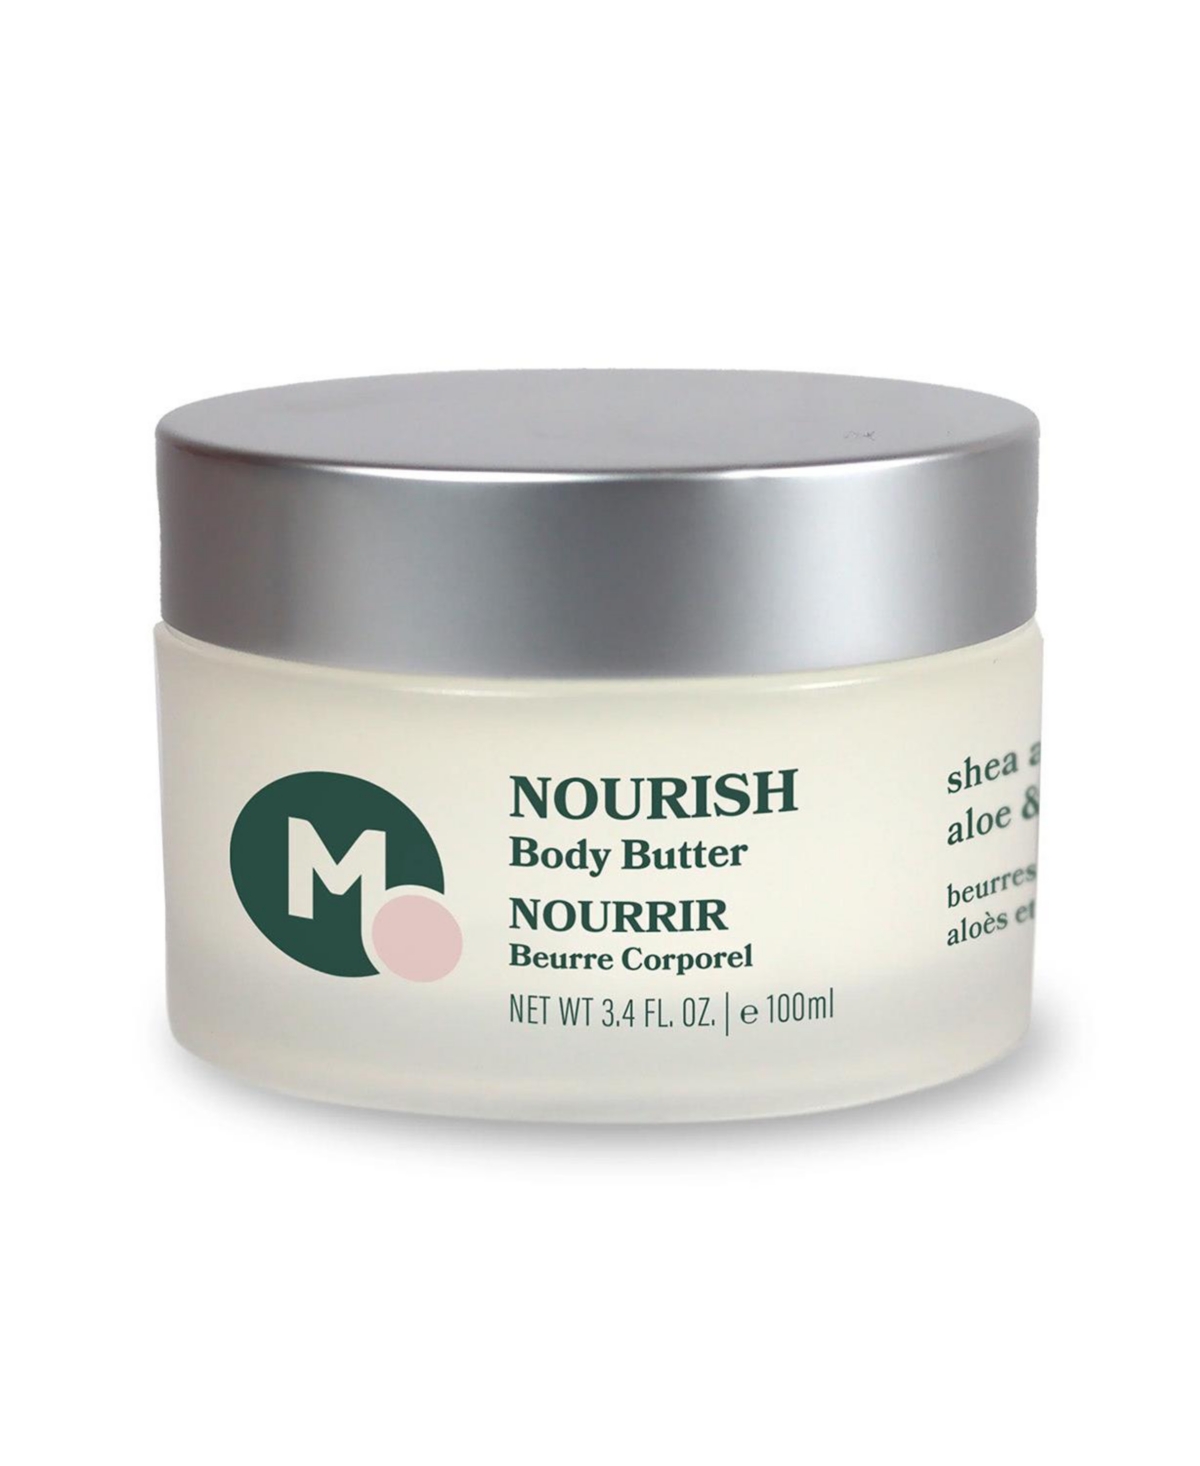 Nourish Body Butter, 3.4 oz / 100 mL